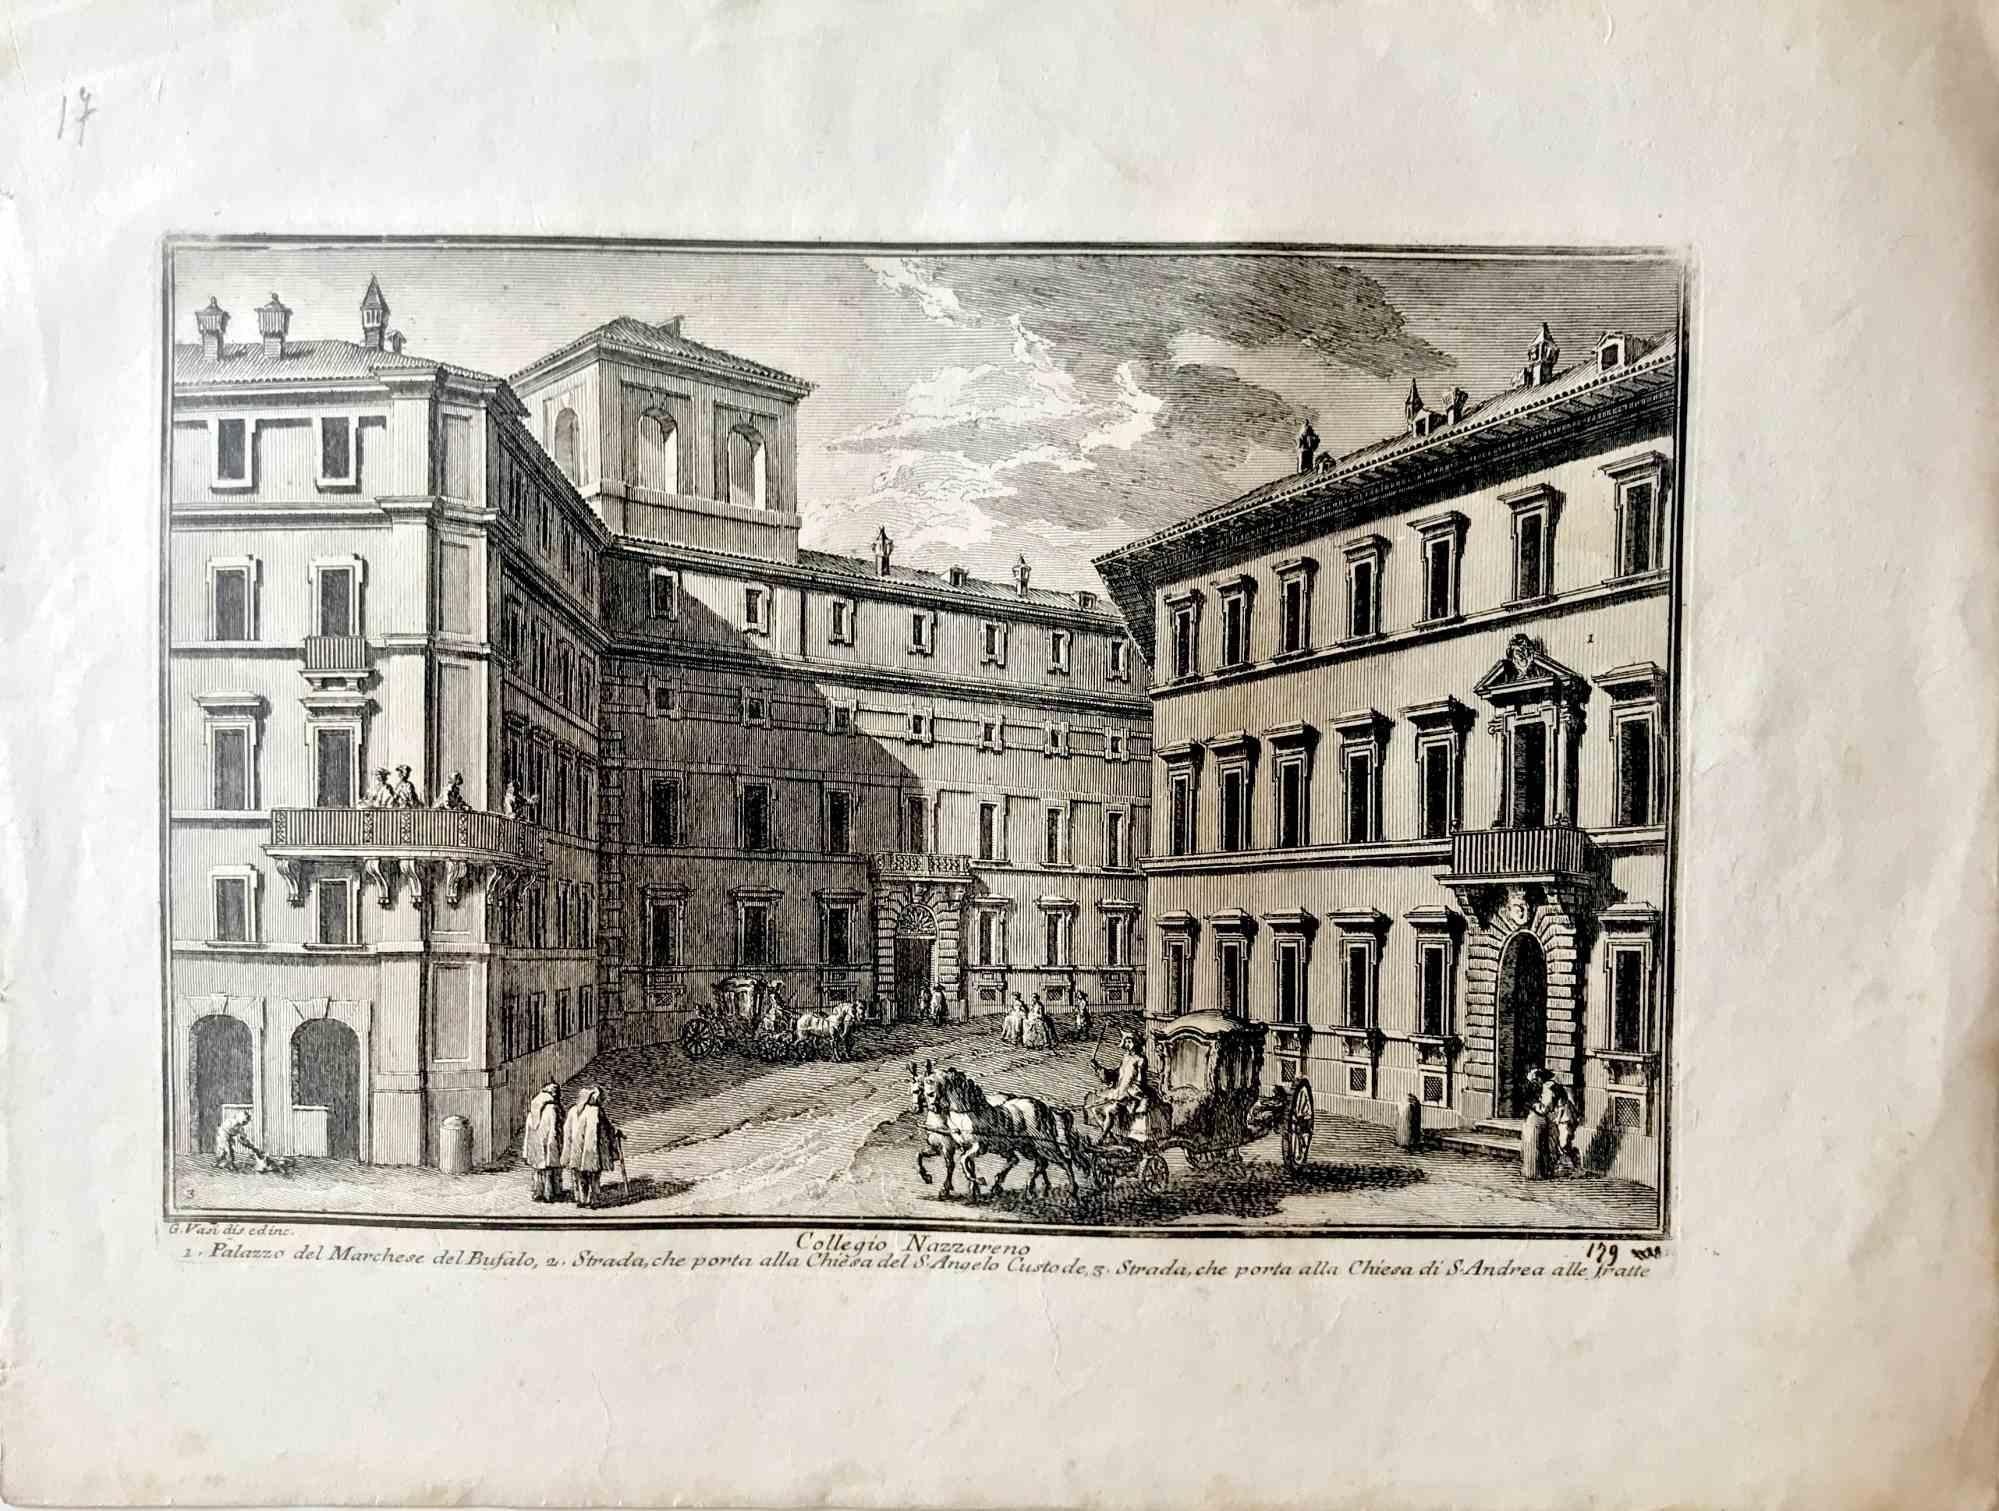 Figurative Print Giuseppe Vasi - Colleggio Nazzareno - Gravure de G. Vasi - Fin du 18e siècle